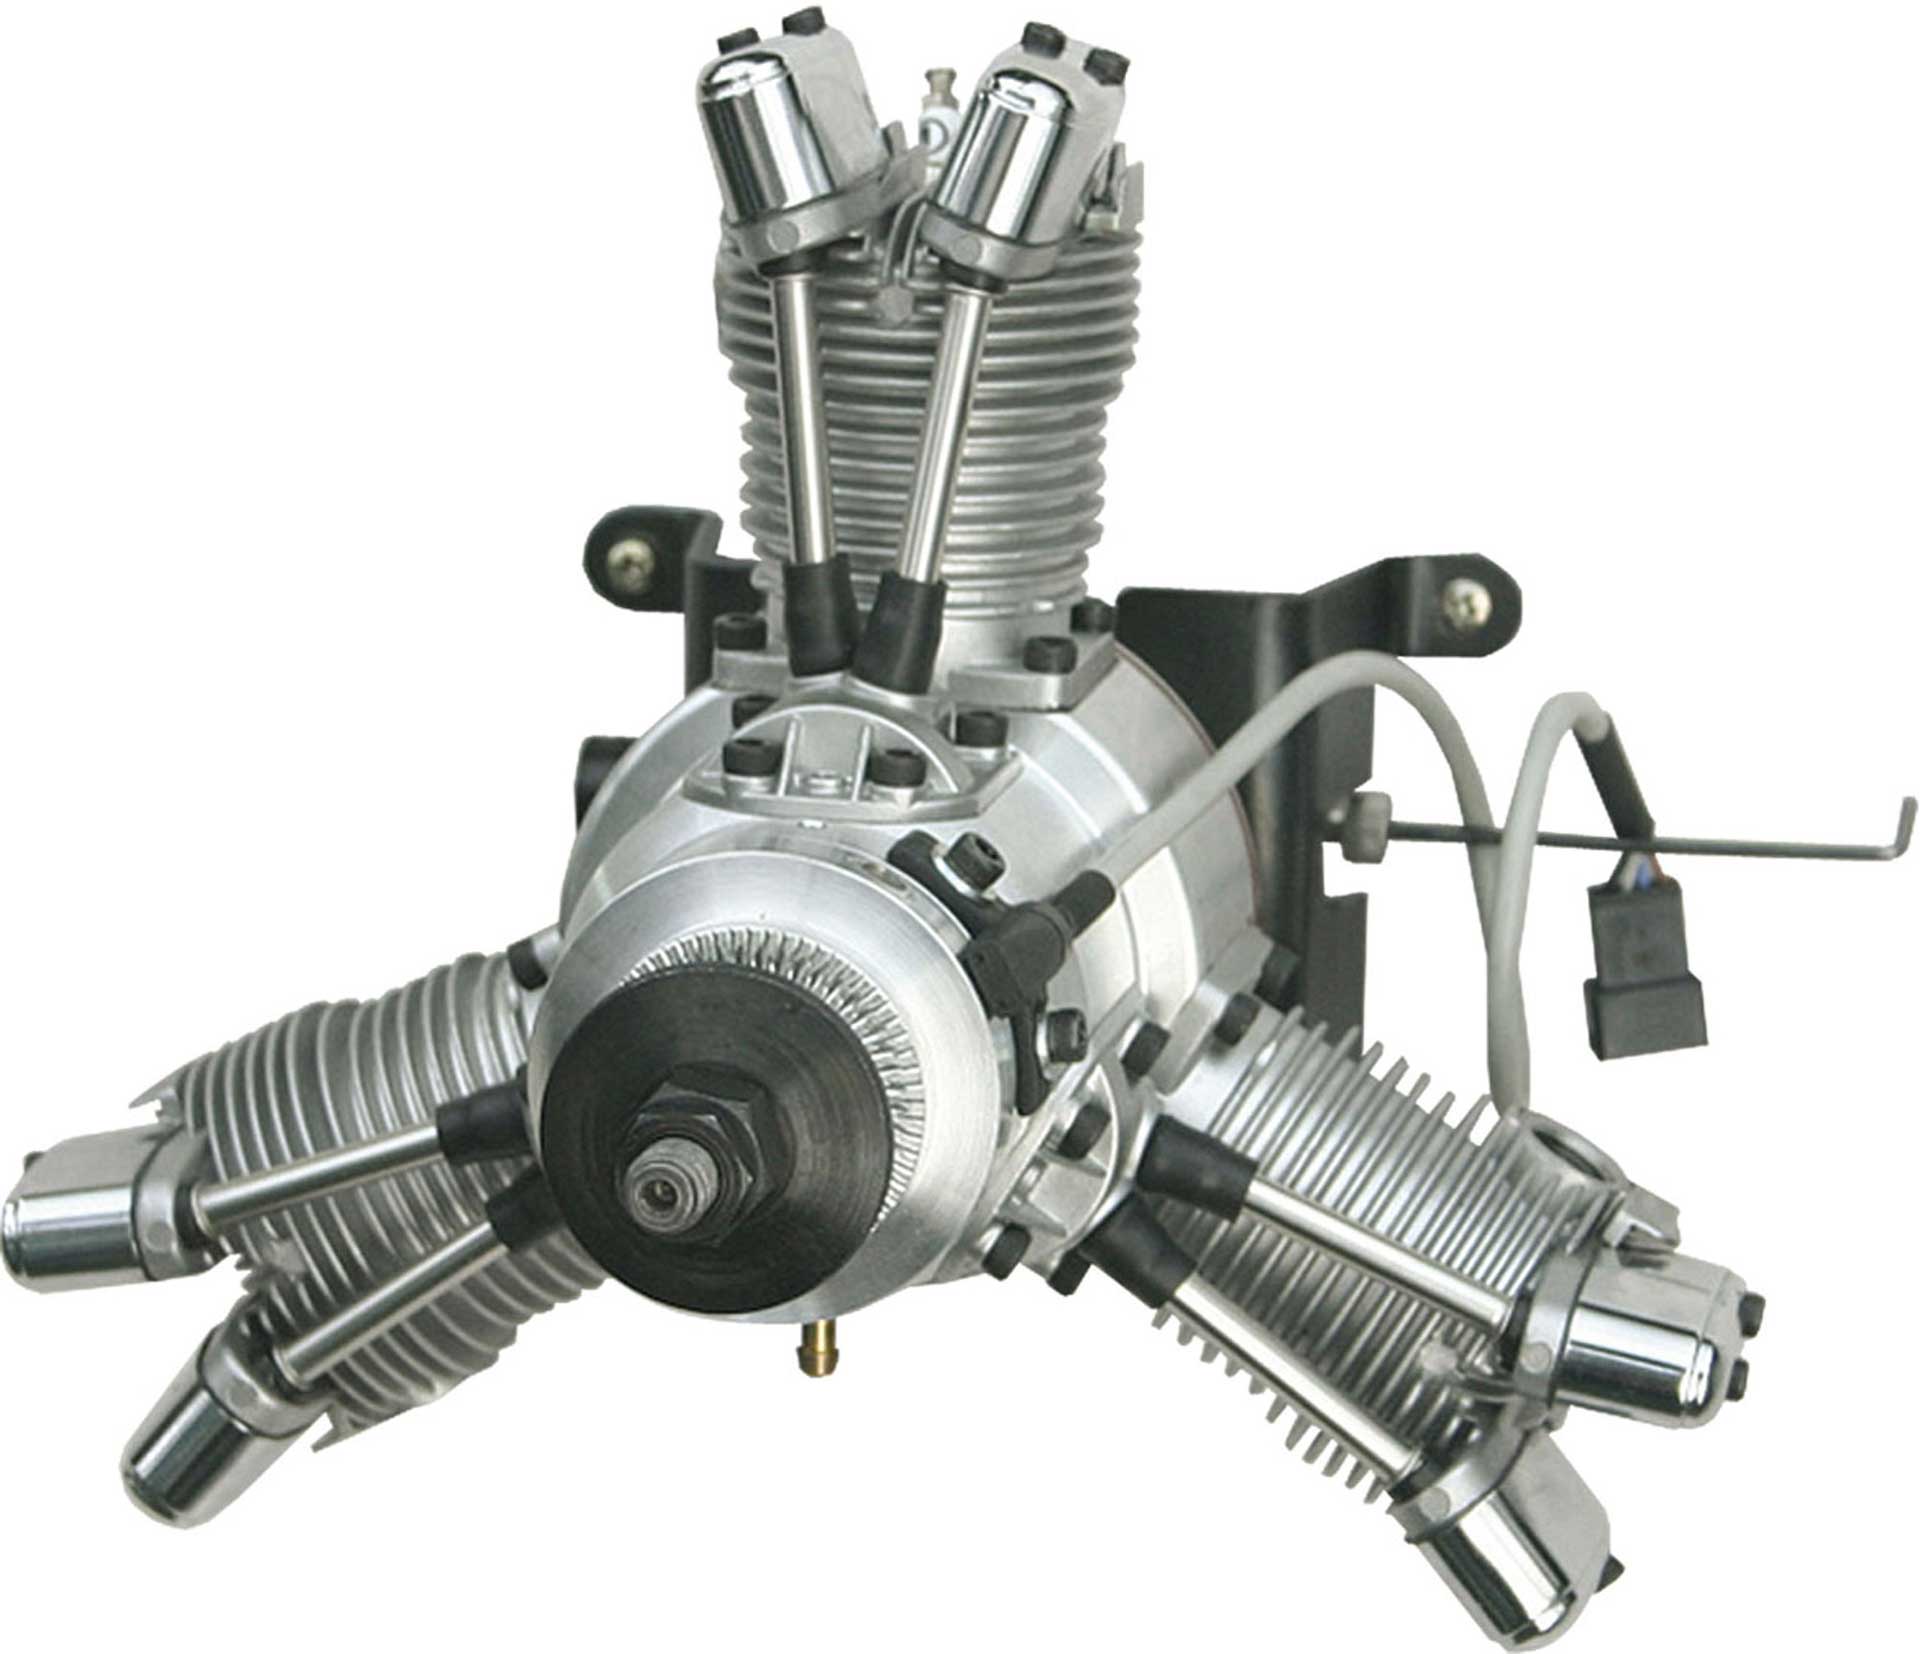 SAITO FG-33R3 gasoline radial engine 3-cylinder